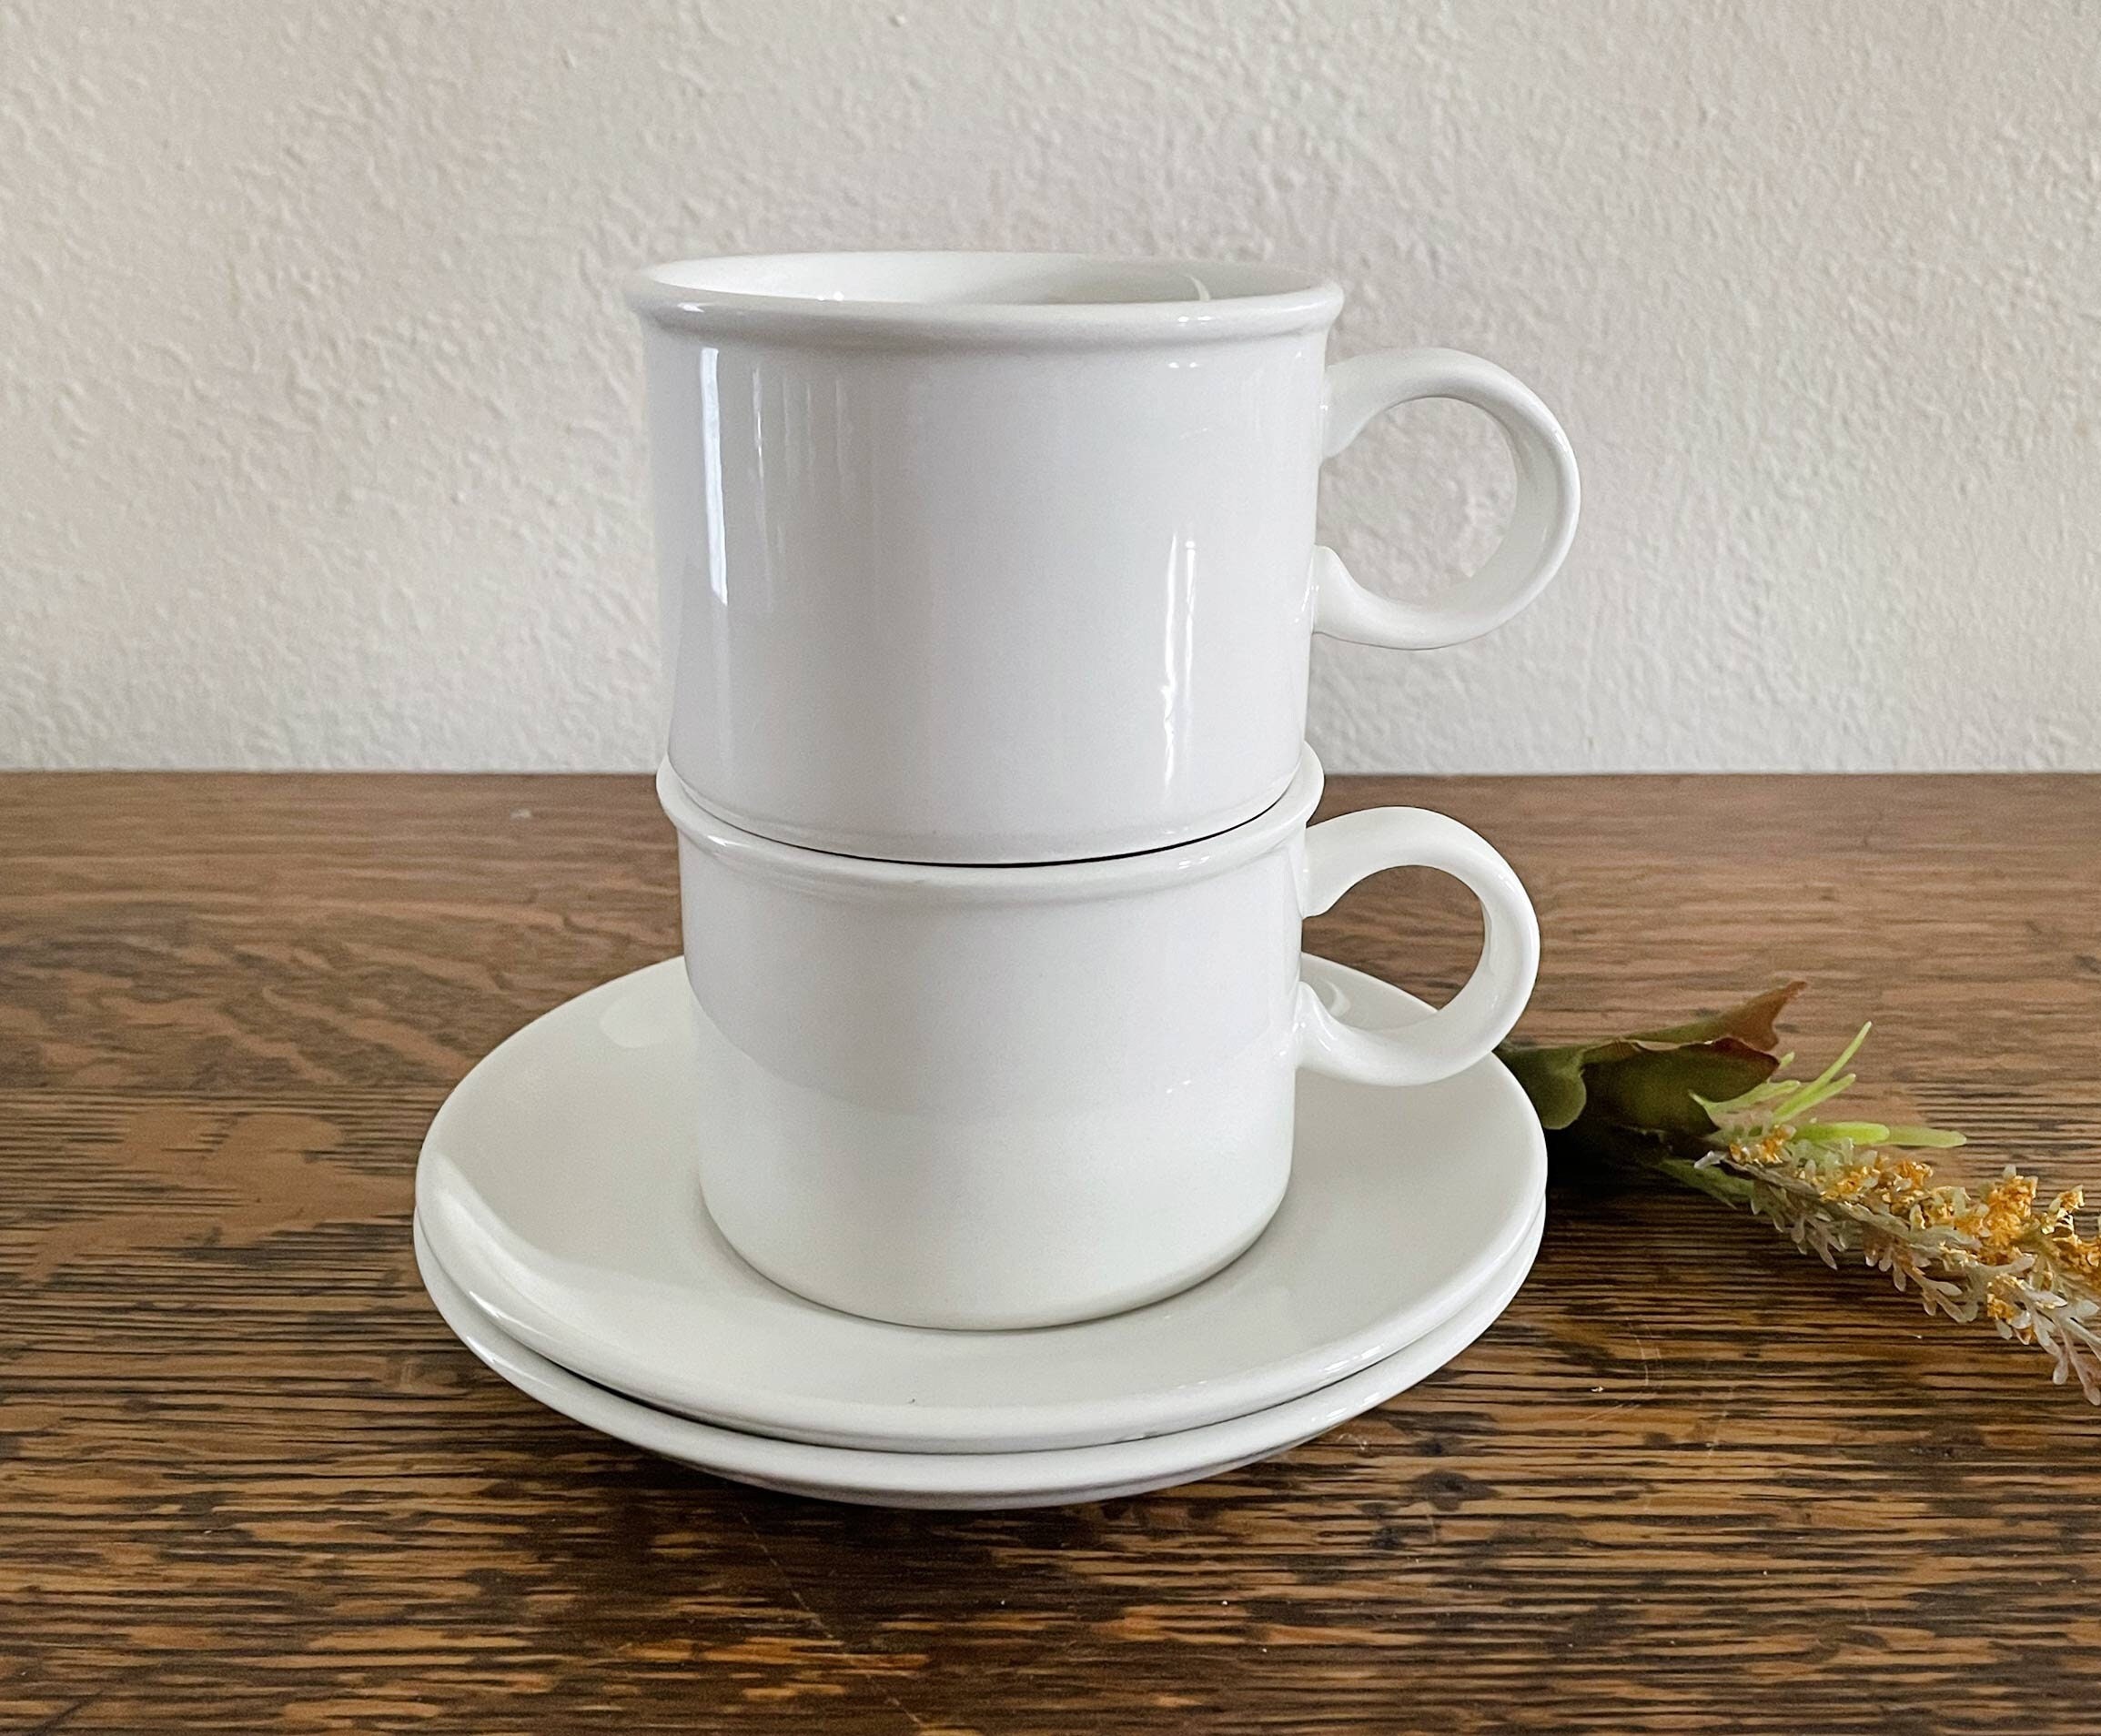 Ceramic Cloud Mug, Flower Coffee Mug and Saucer Set, Creative Cute Coffee  Cups with Sunflower Coaster, Espresso Cups for Latte, Tea, Milk, Gifts